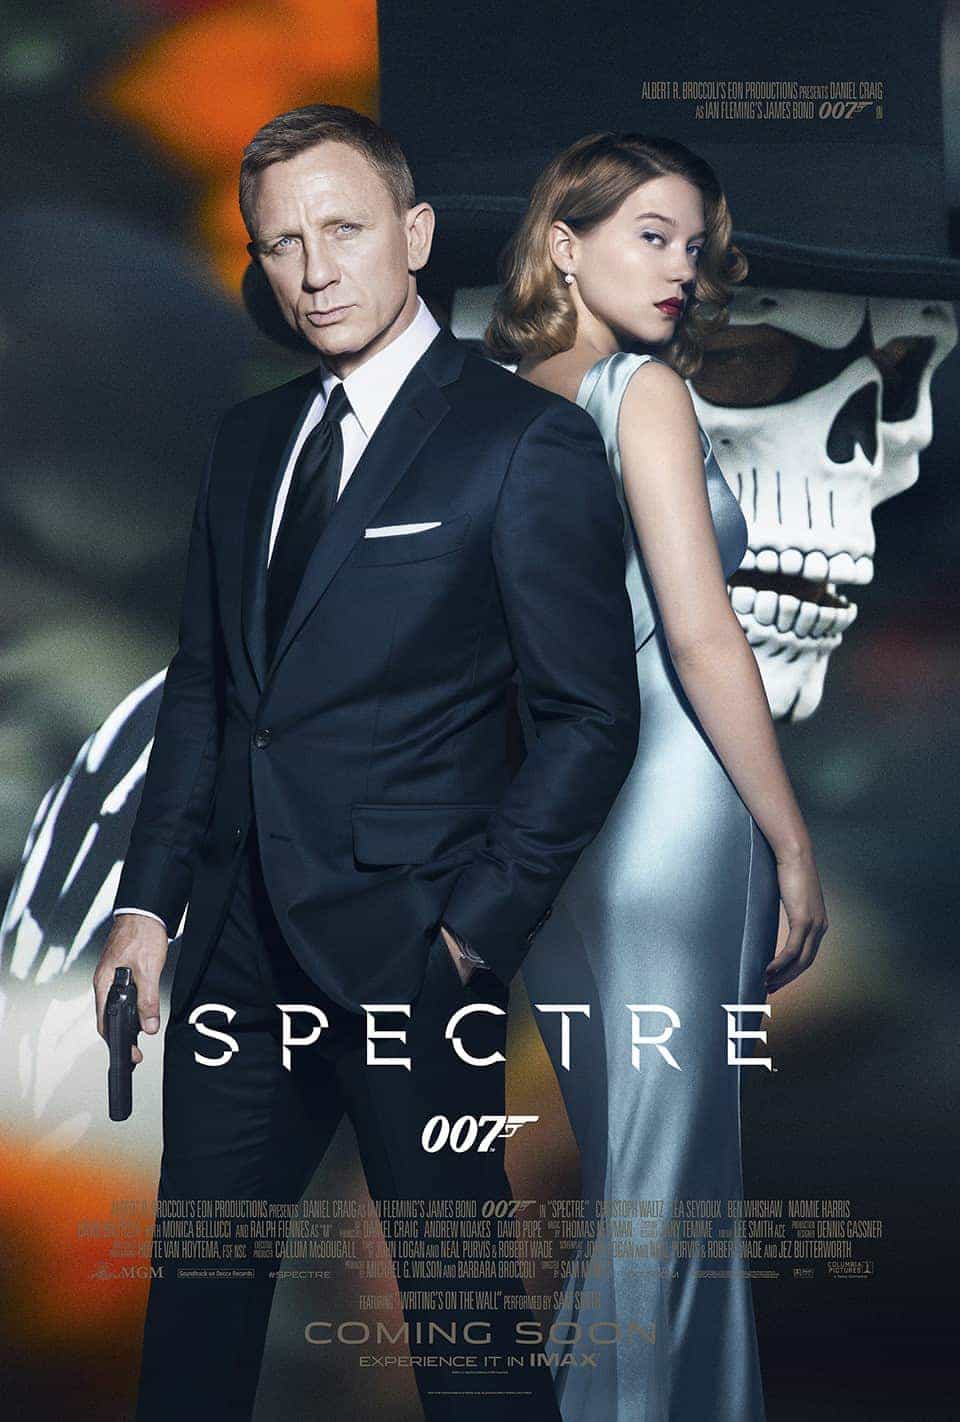 World Box Office Chart Weekending 1 November 2015:  Spectre dominates since its Monday opening